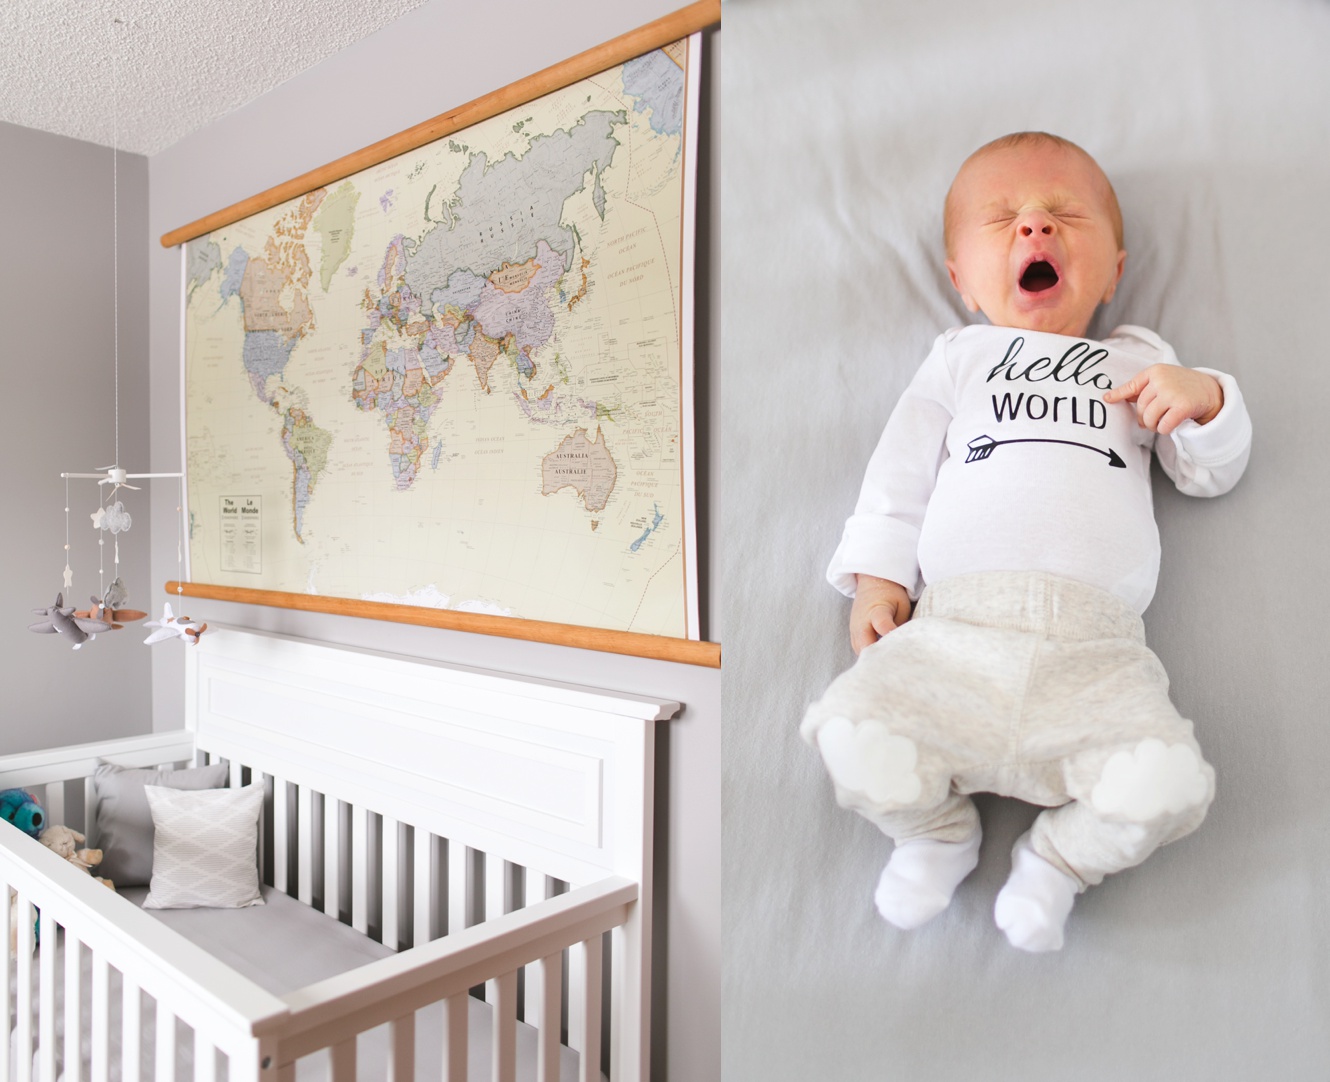 hello world sleeper and adventure map themed nursery photo